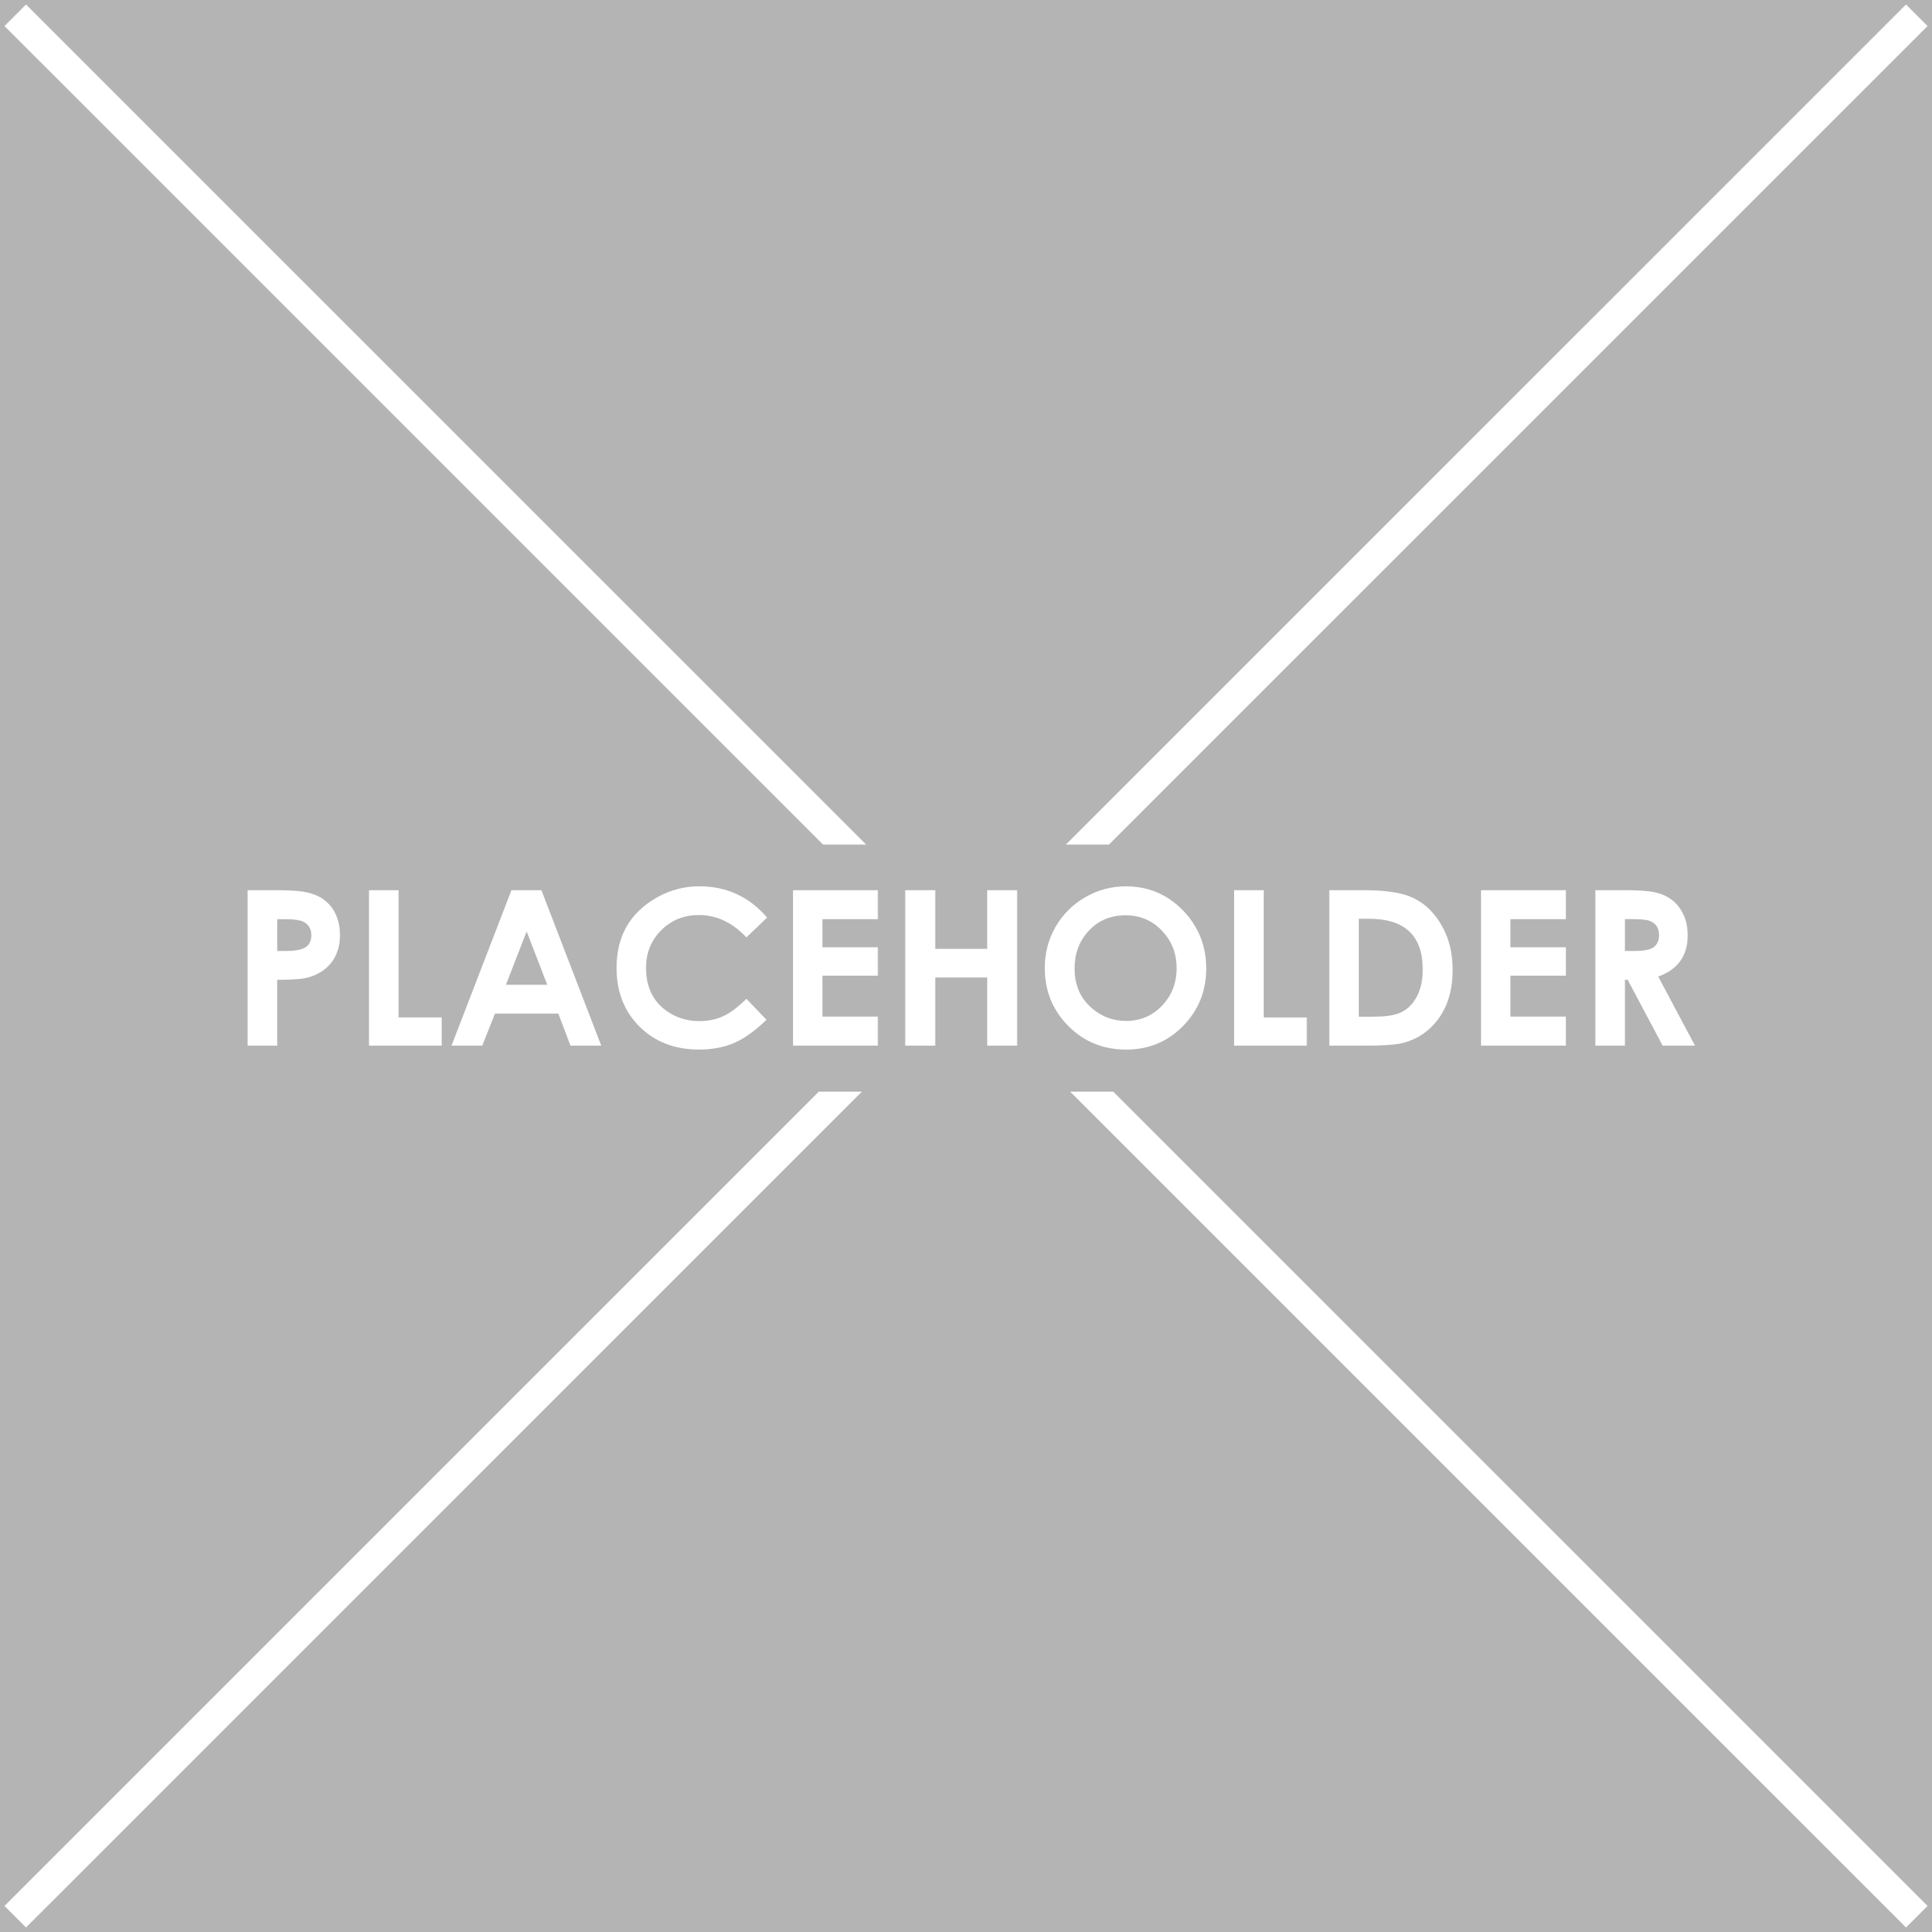 placeholder.1562145897.png